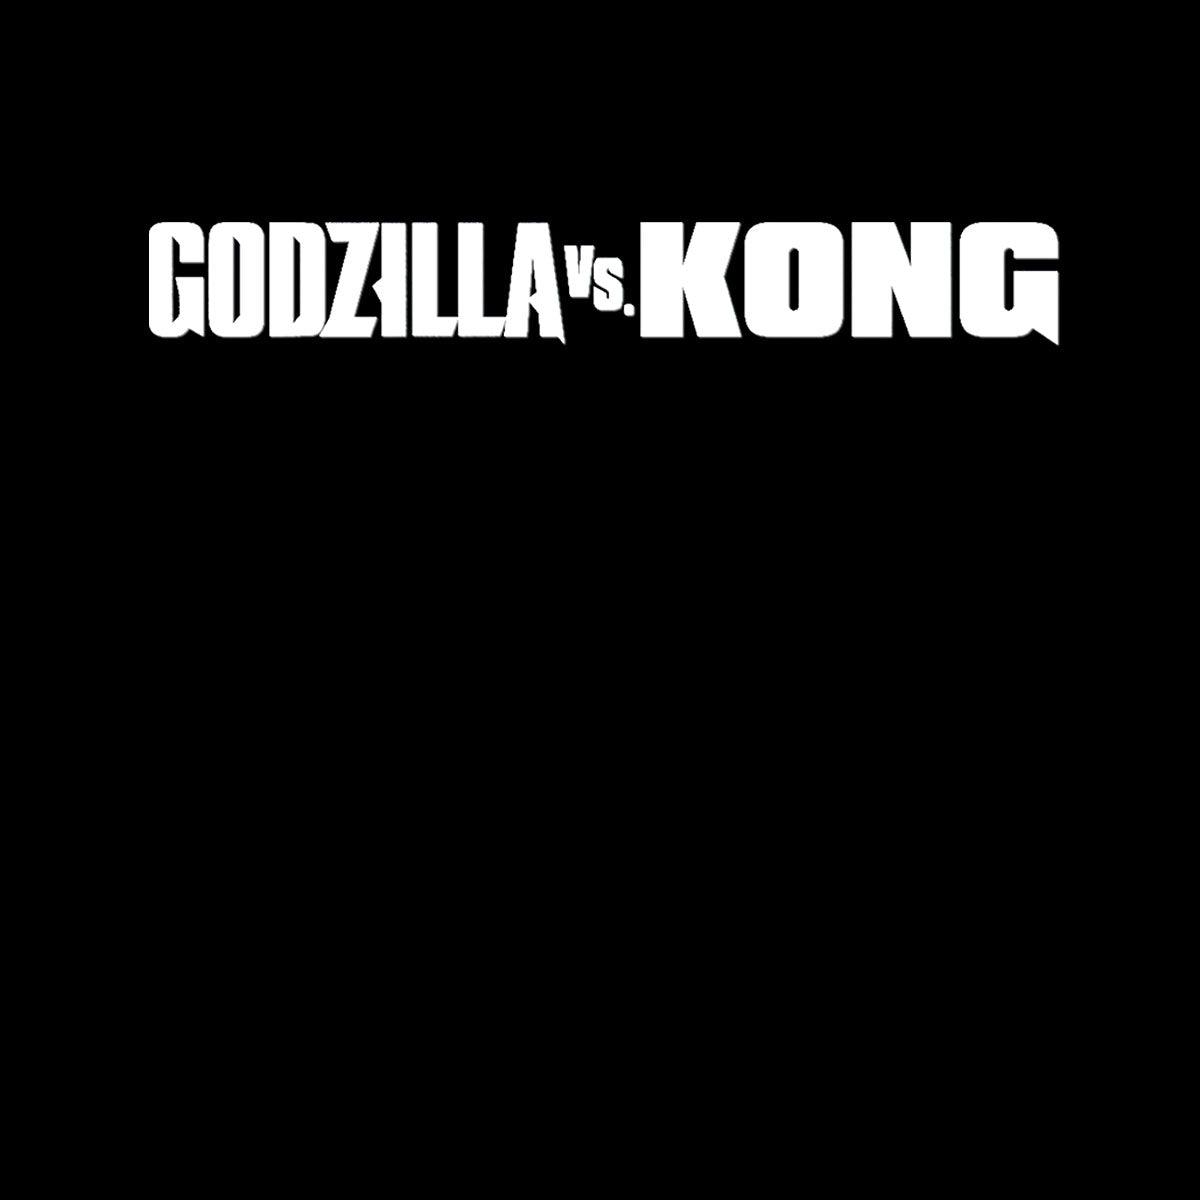 Godzilla Vs Kong T-Shirt King Kong Monster Movie Fans Birthday Gift Tee Top Unisex T-Shirt - Kuzi Tees